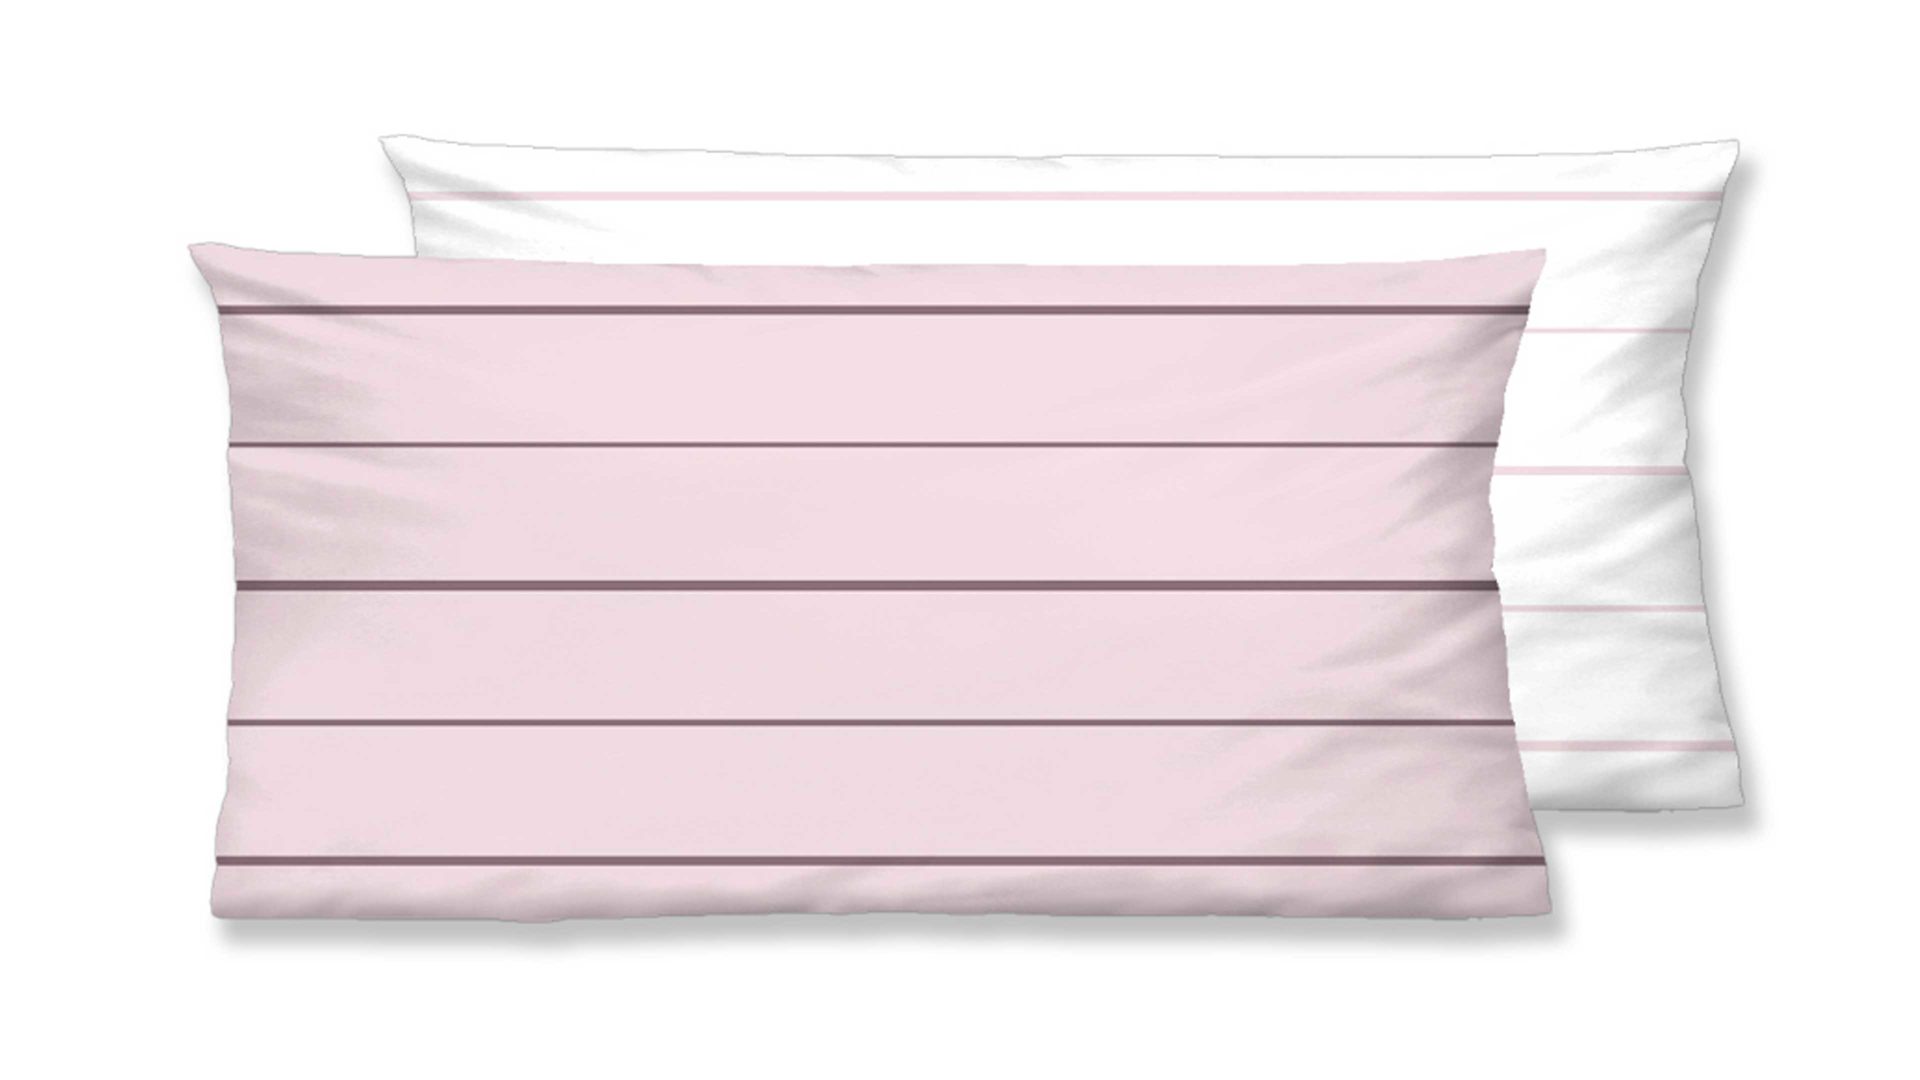 Kissenbezug /-hülle Biberna aus Stoff in Pastellfarben biberna Mako-Satin Kissenbezug Streifen Mix & Match rosefarbene & sturmgraue Streifen – ca. 40 x 80 cm